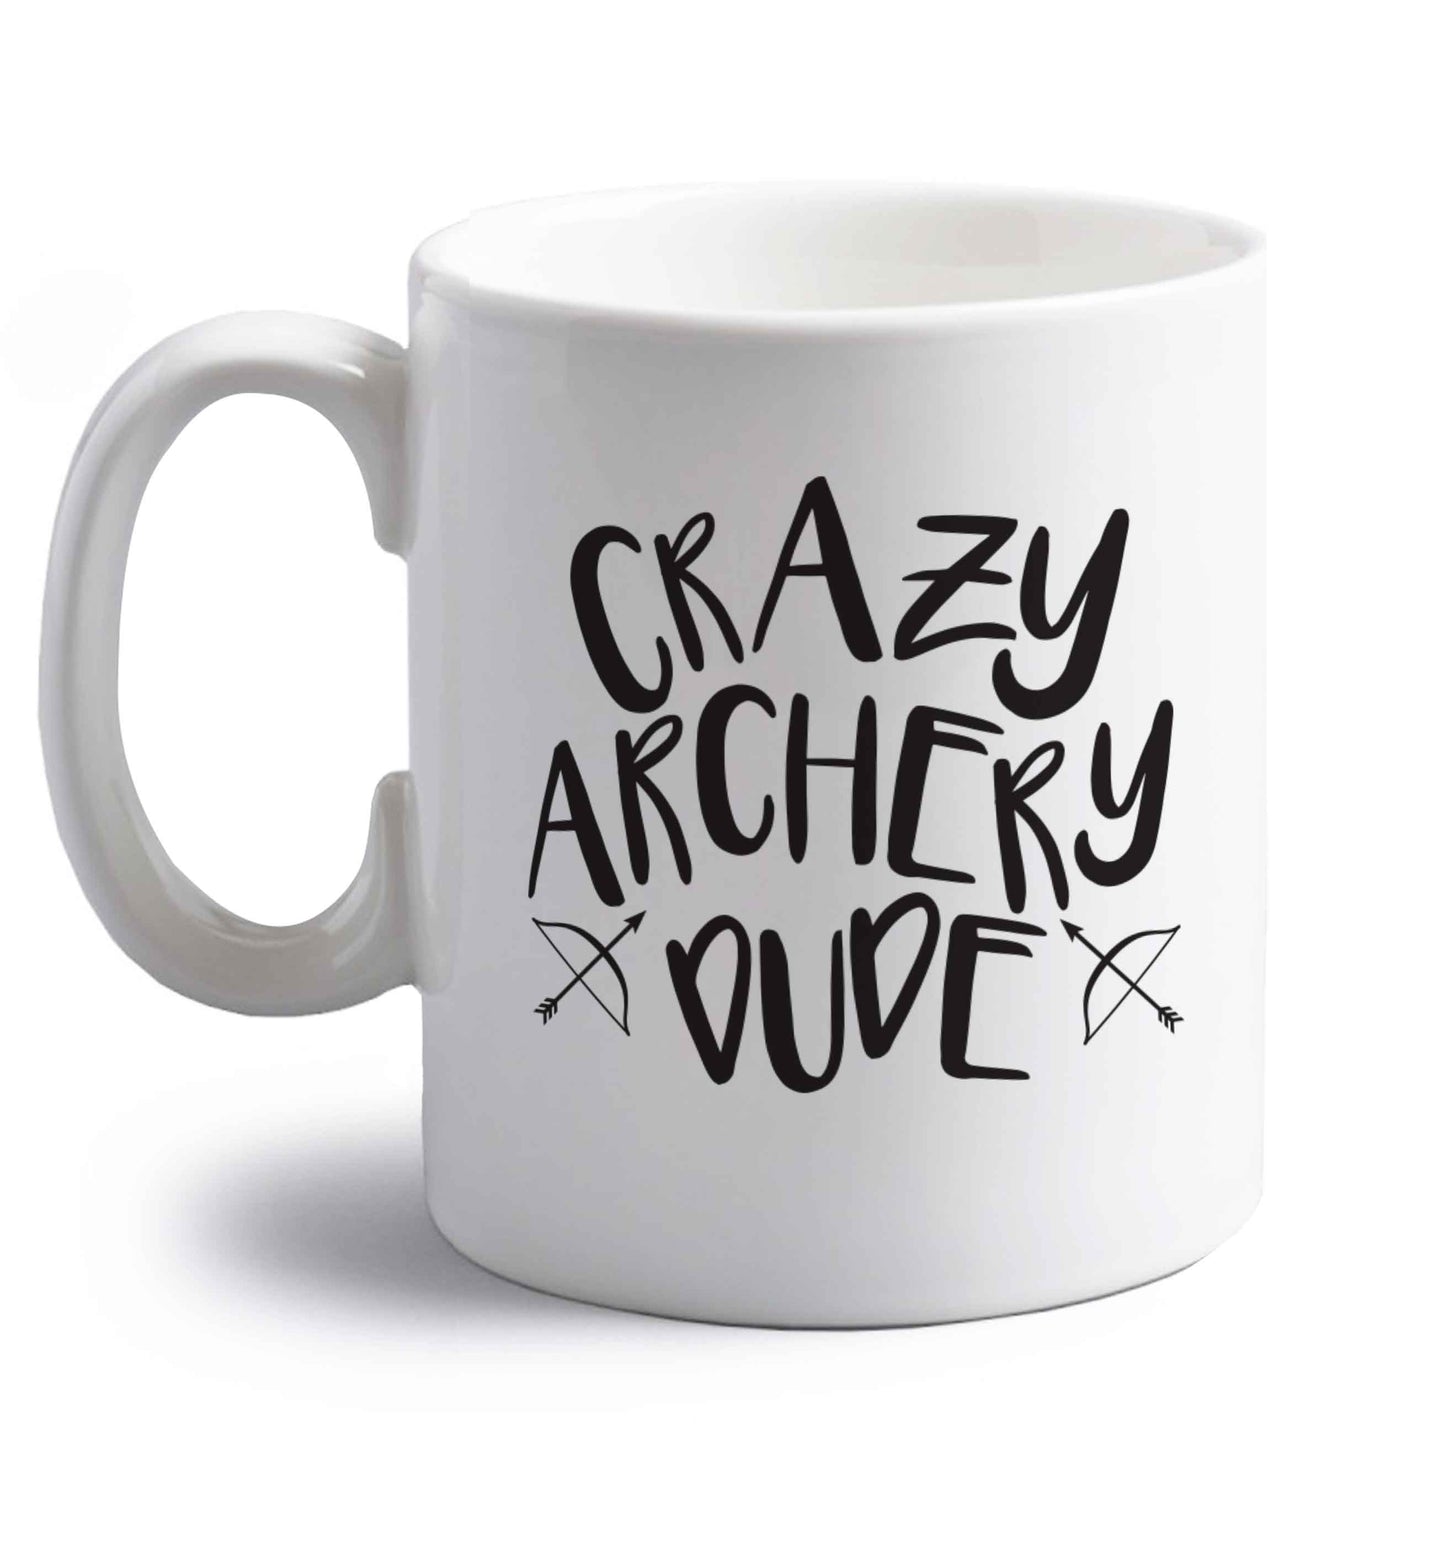 Crazy archery dude right handed white ceramic mug 